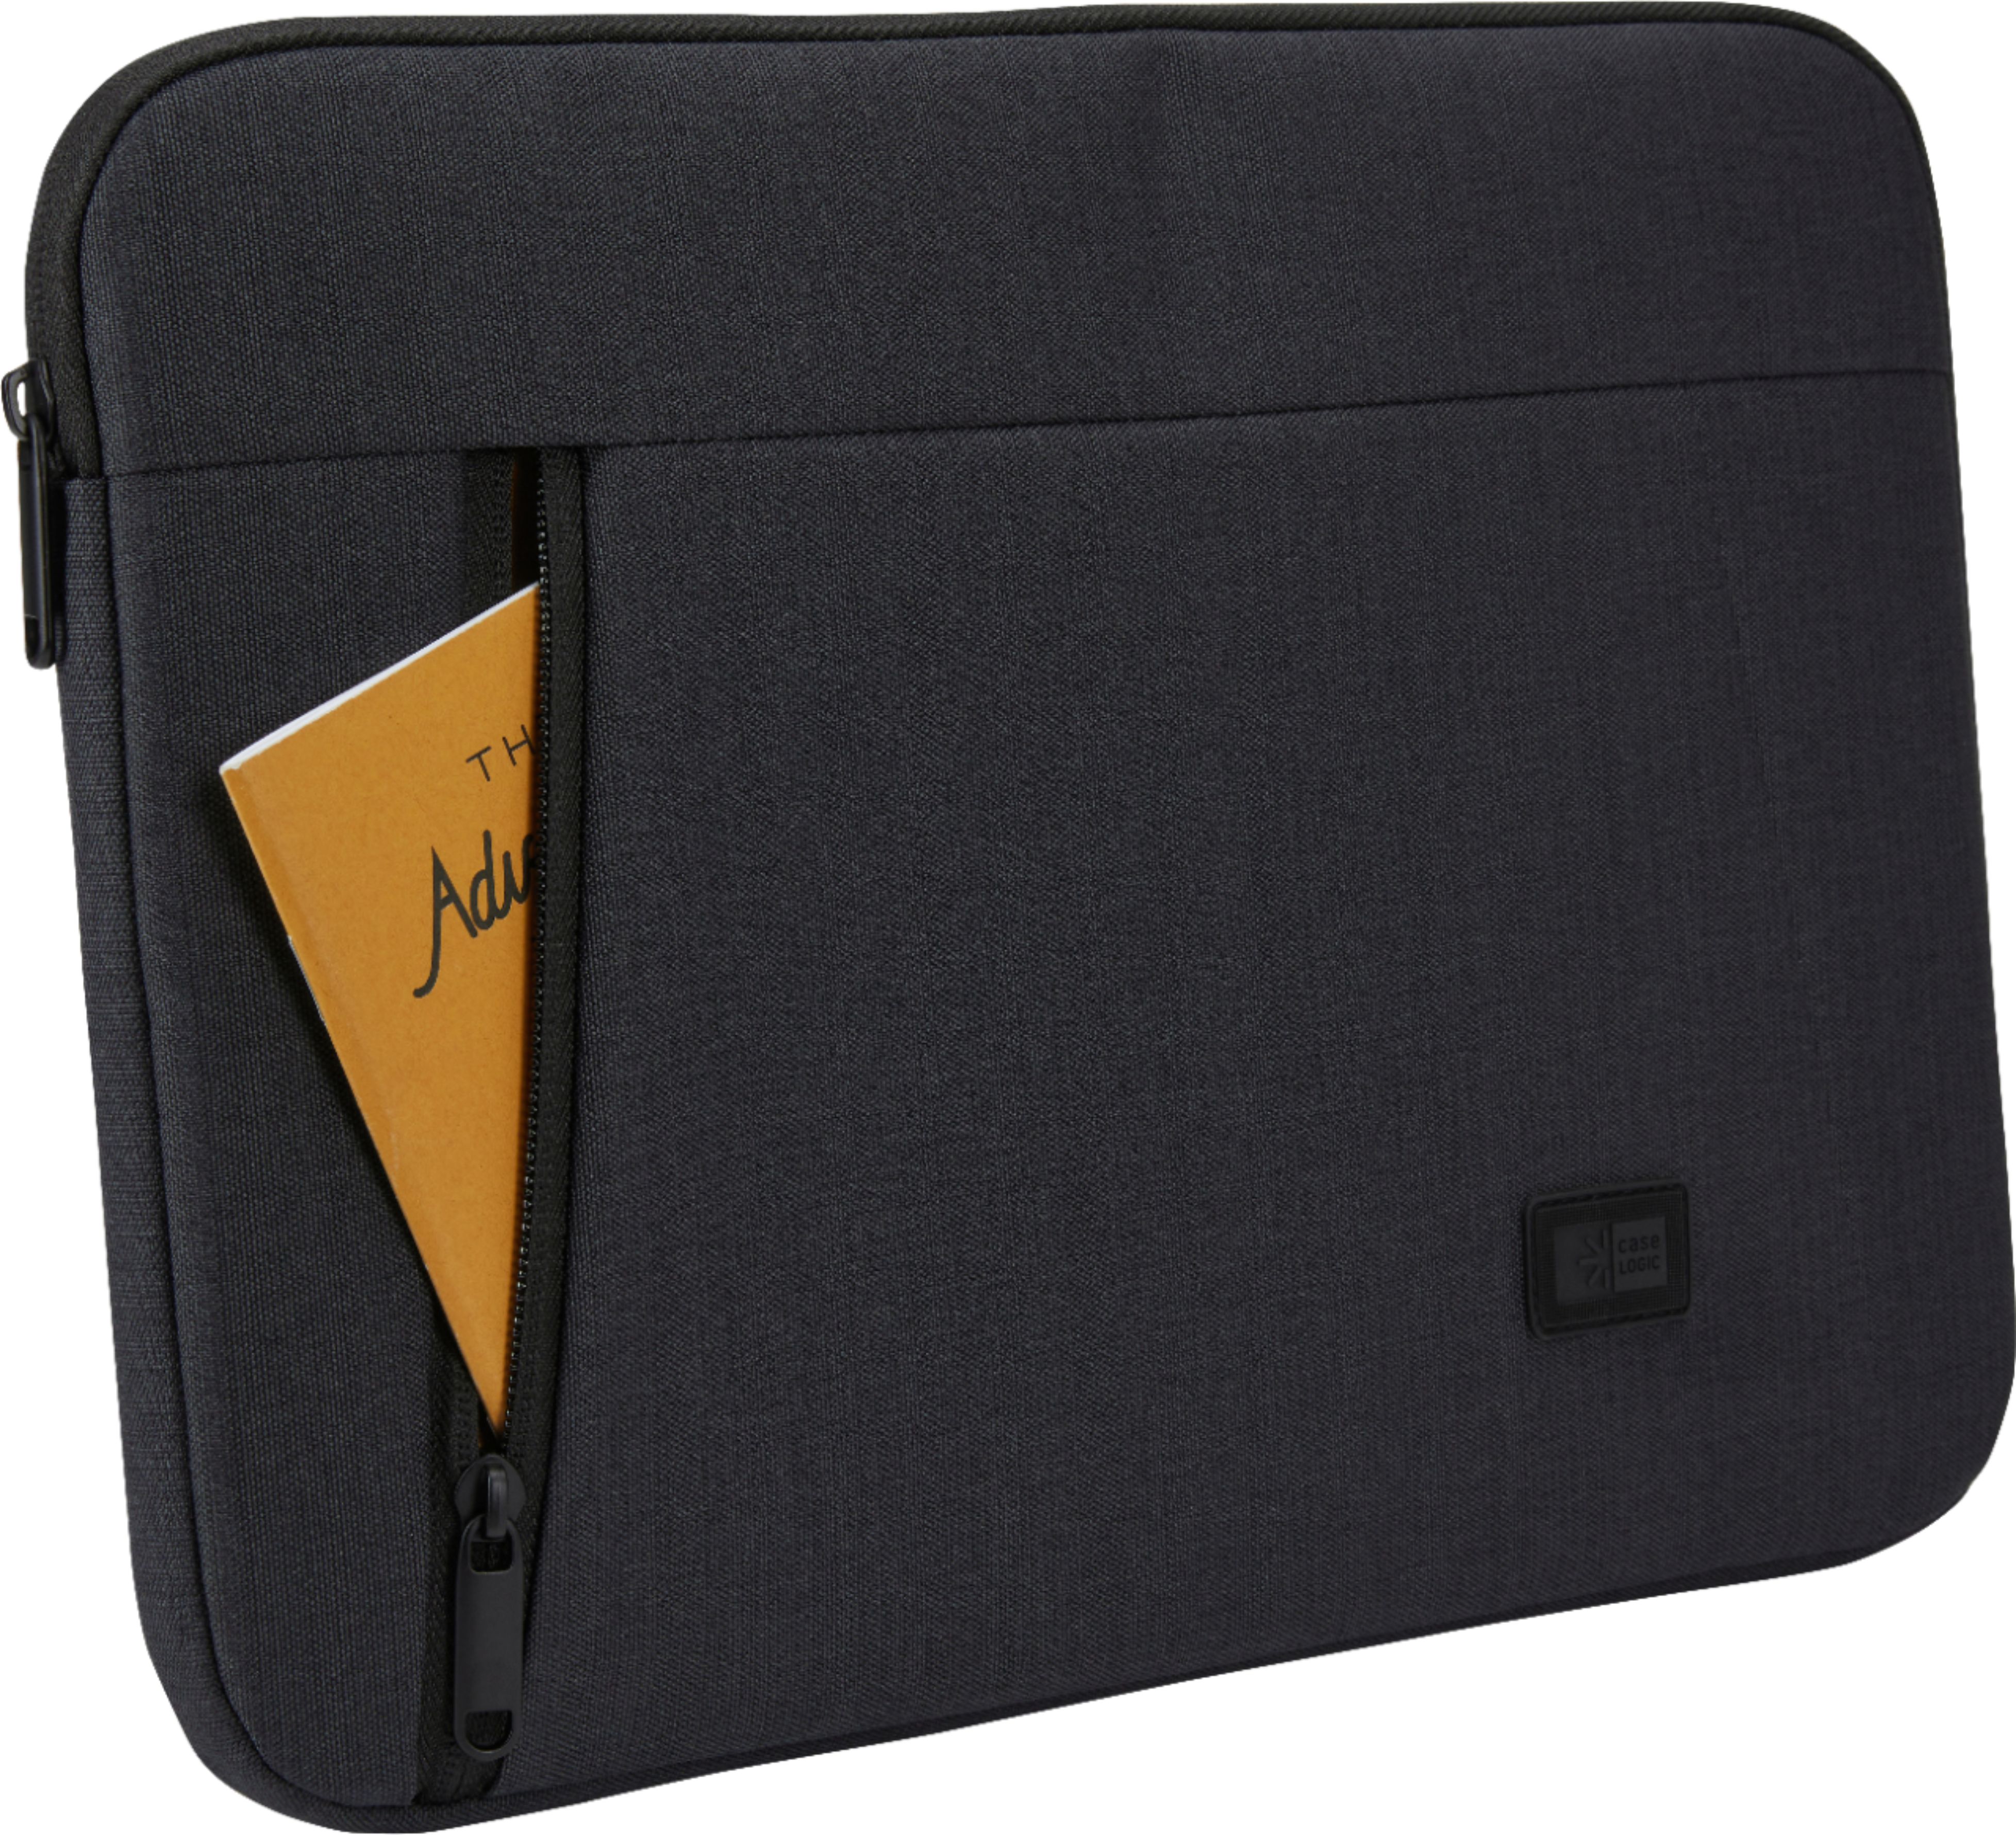 goldyard Laptop Sleeve for Sale by JazminCrist